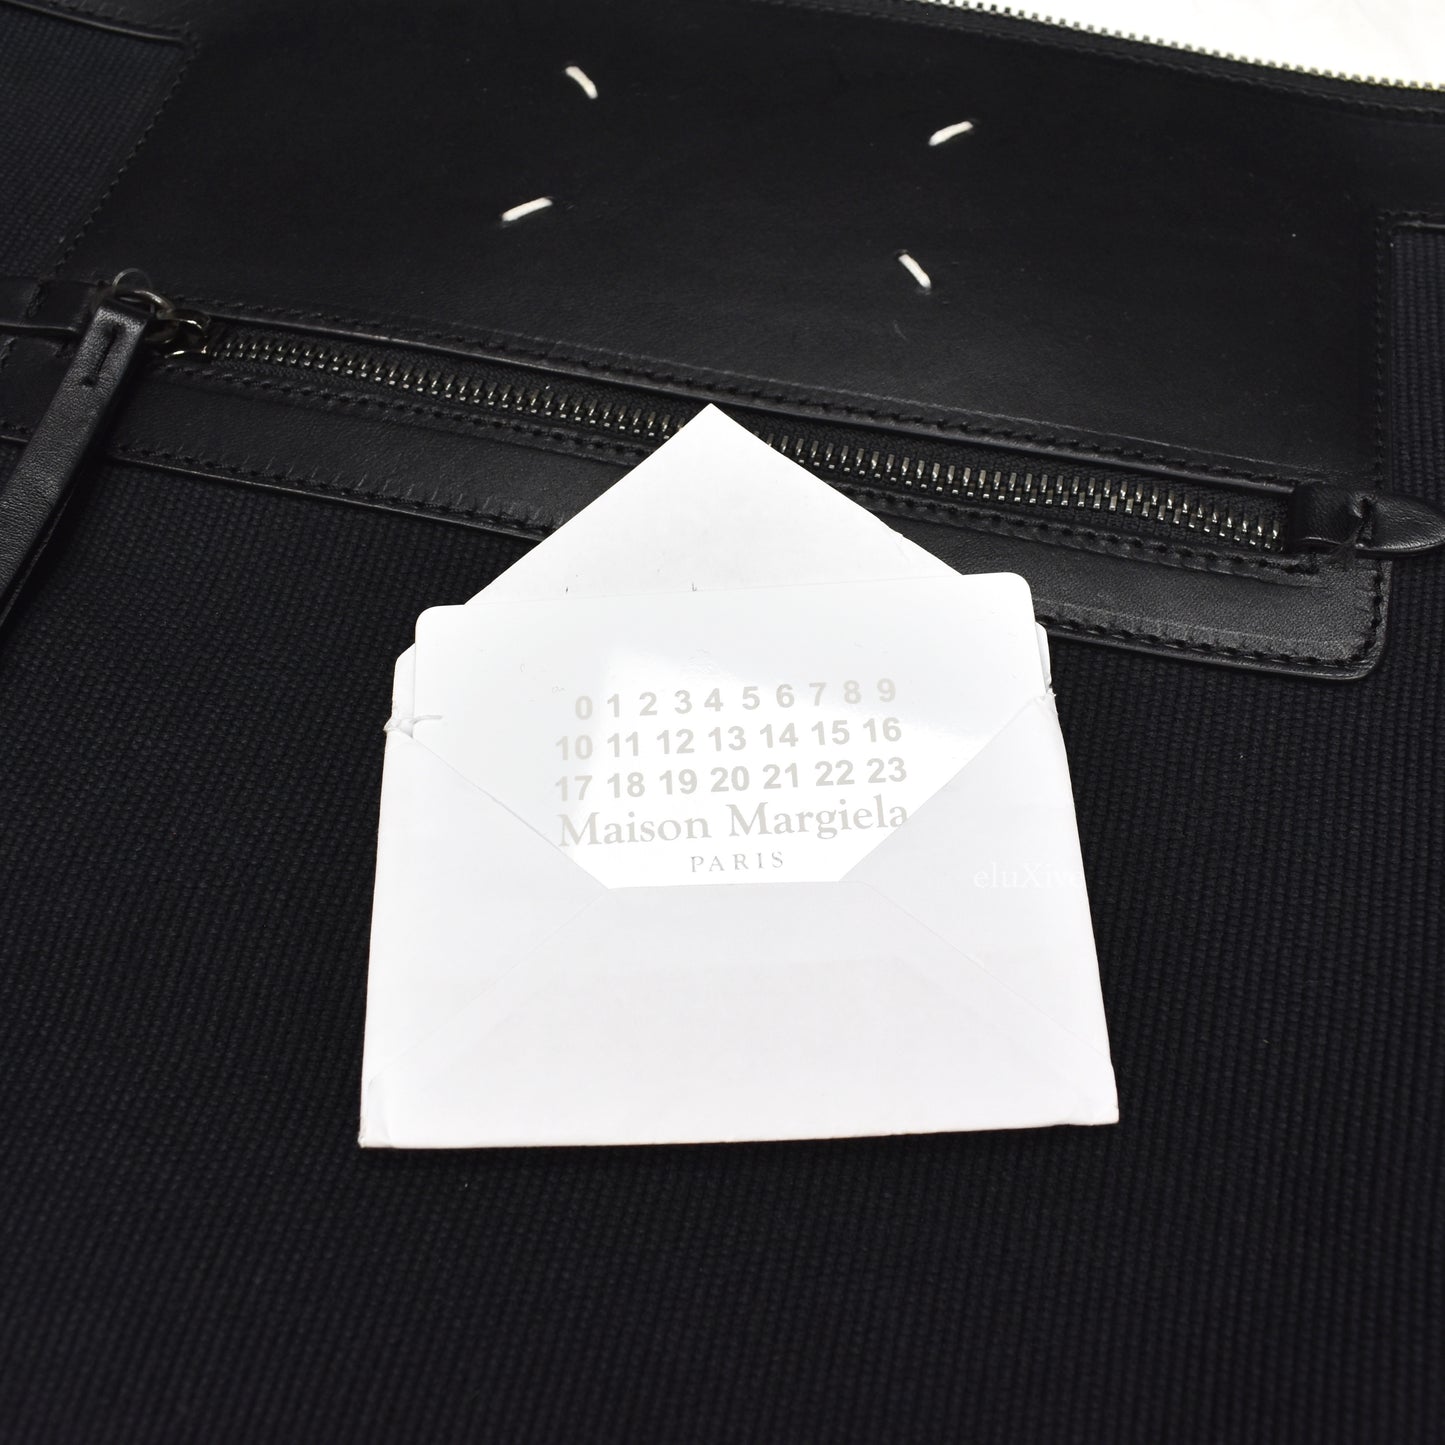 Maison Margiela - Black Canvas & Leather Shoulder Bag